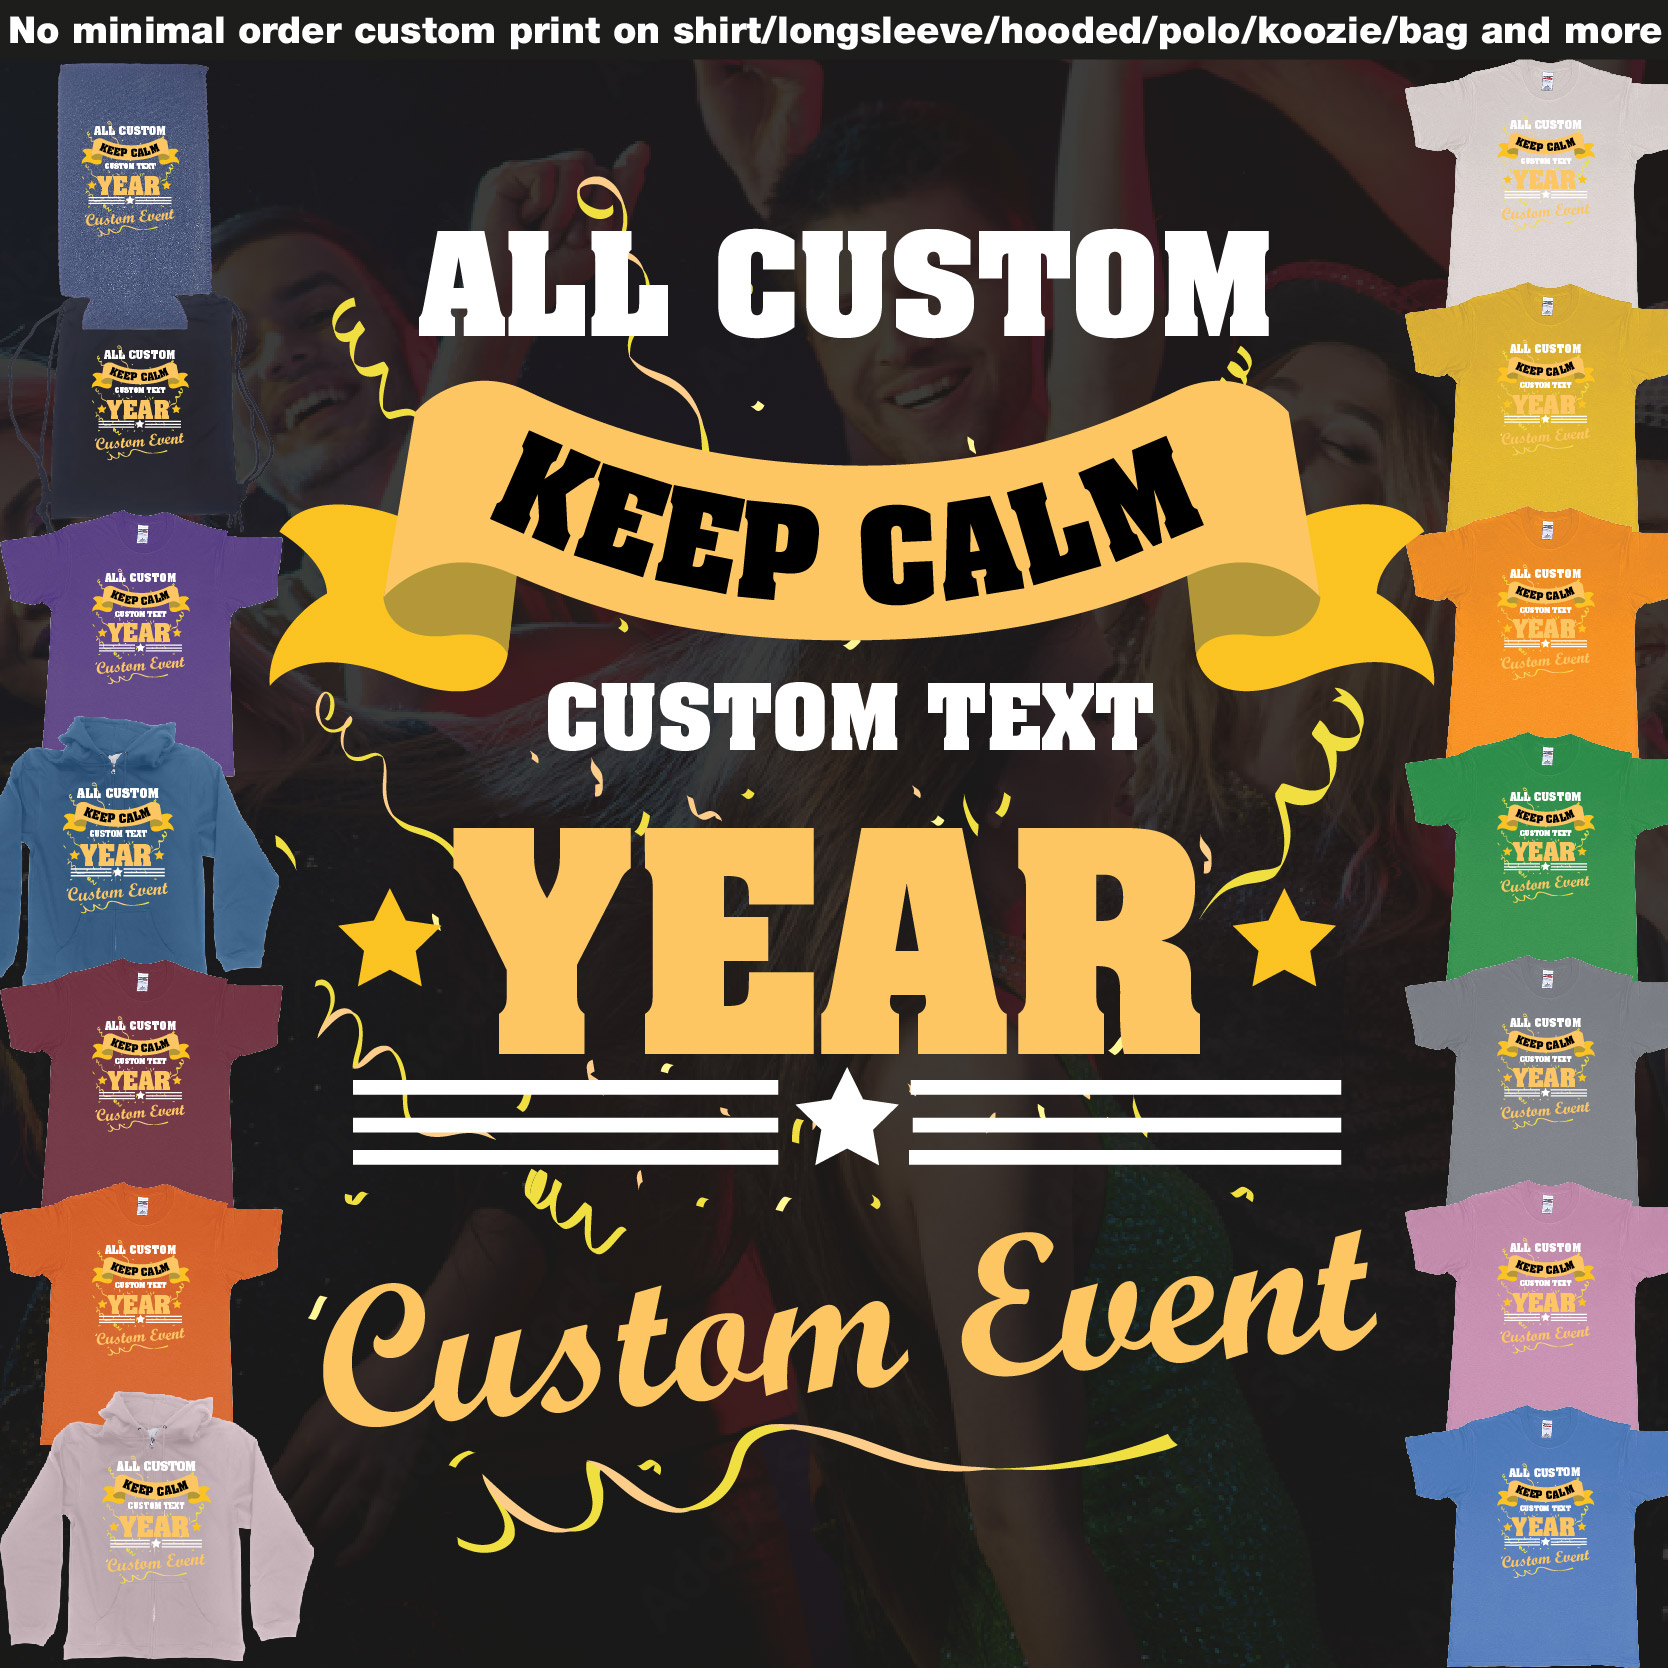 Keep Calm Event Party Birthday Bash Custom Design Text 01 Overview Design Garments